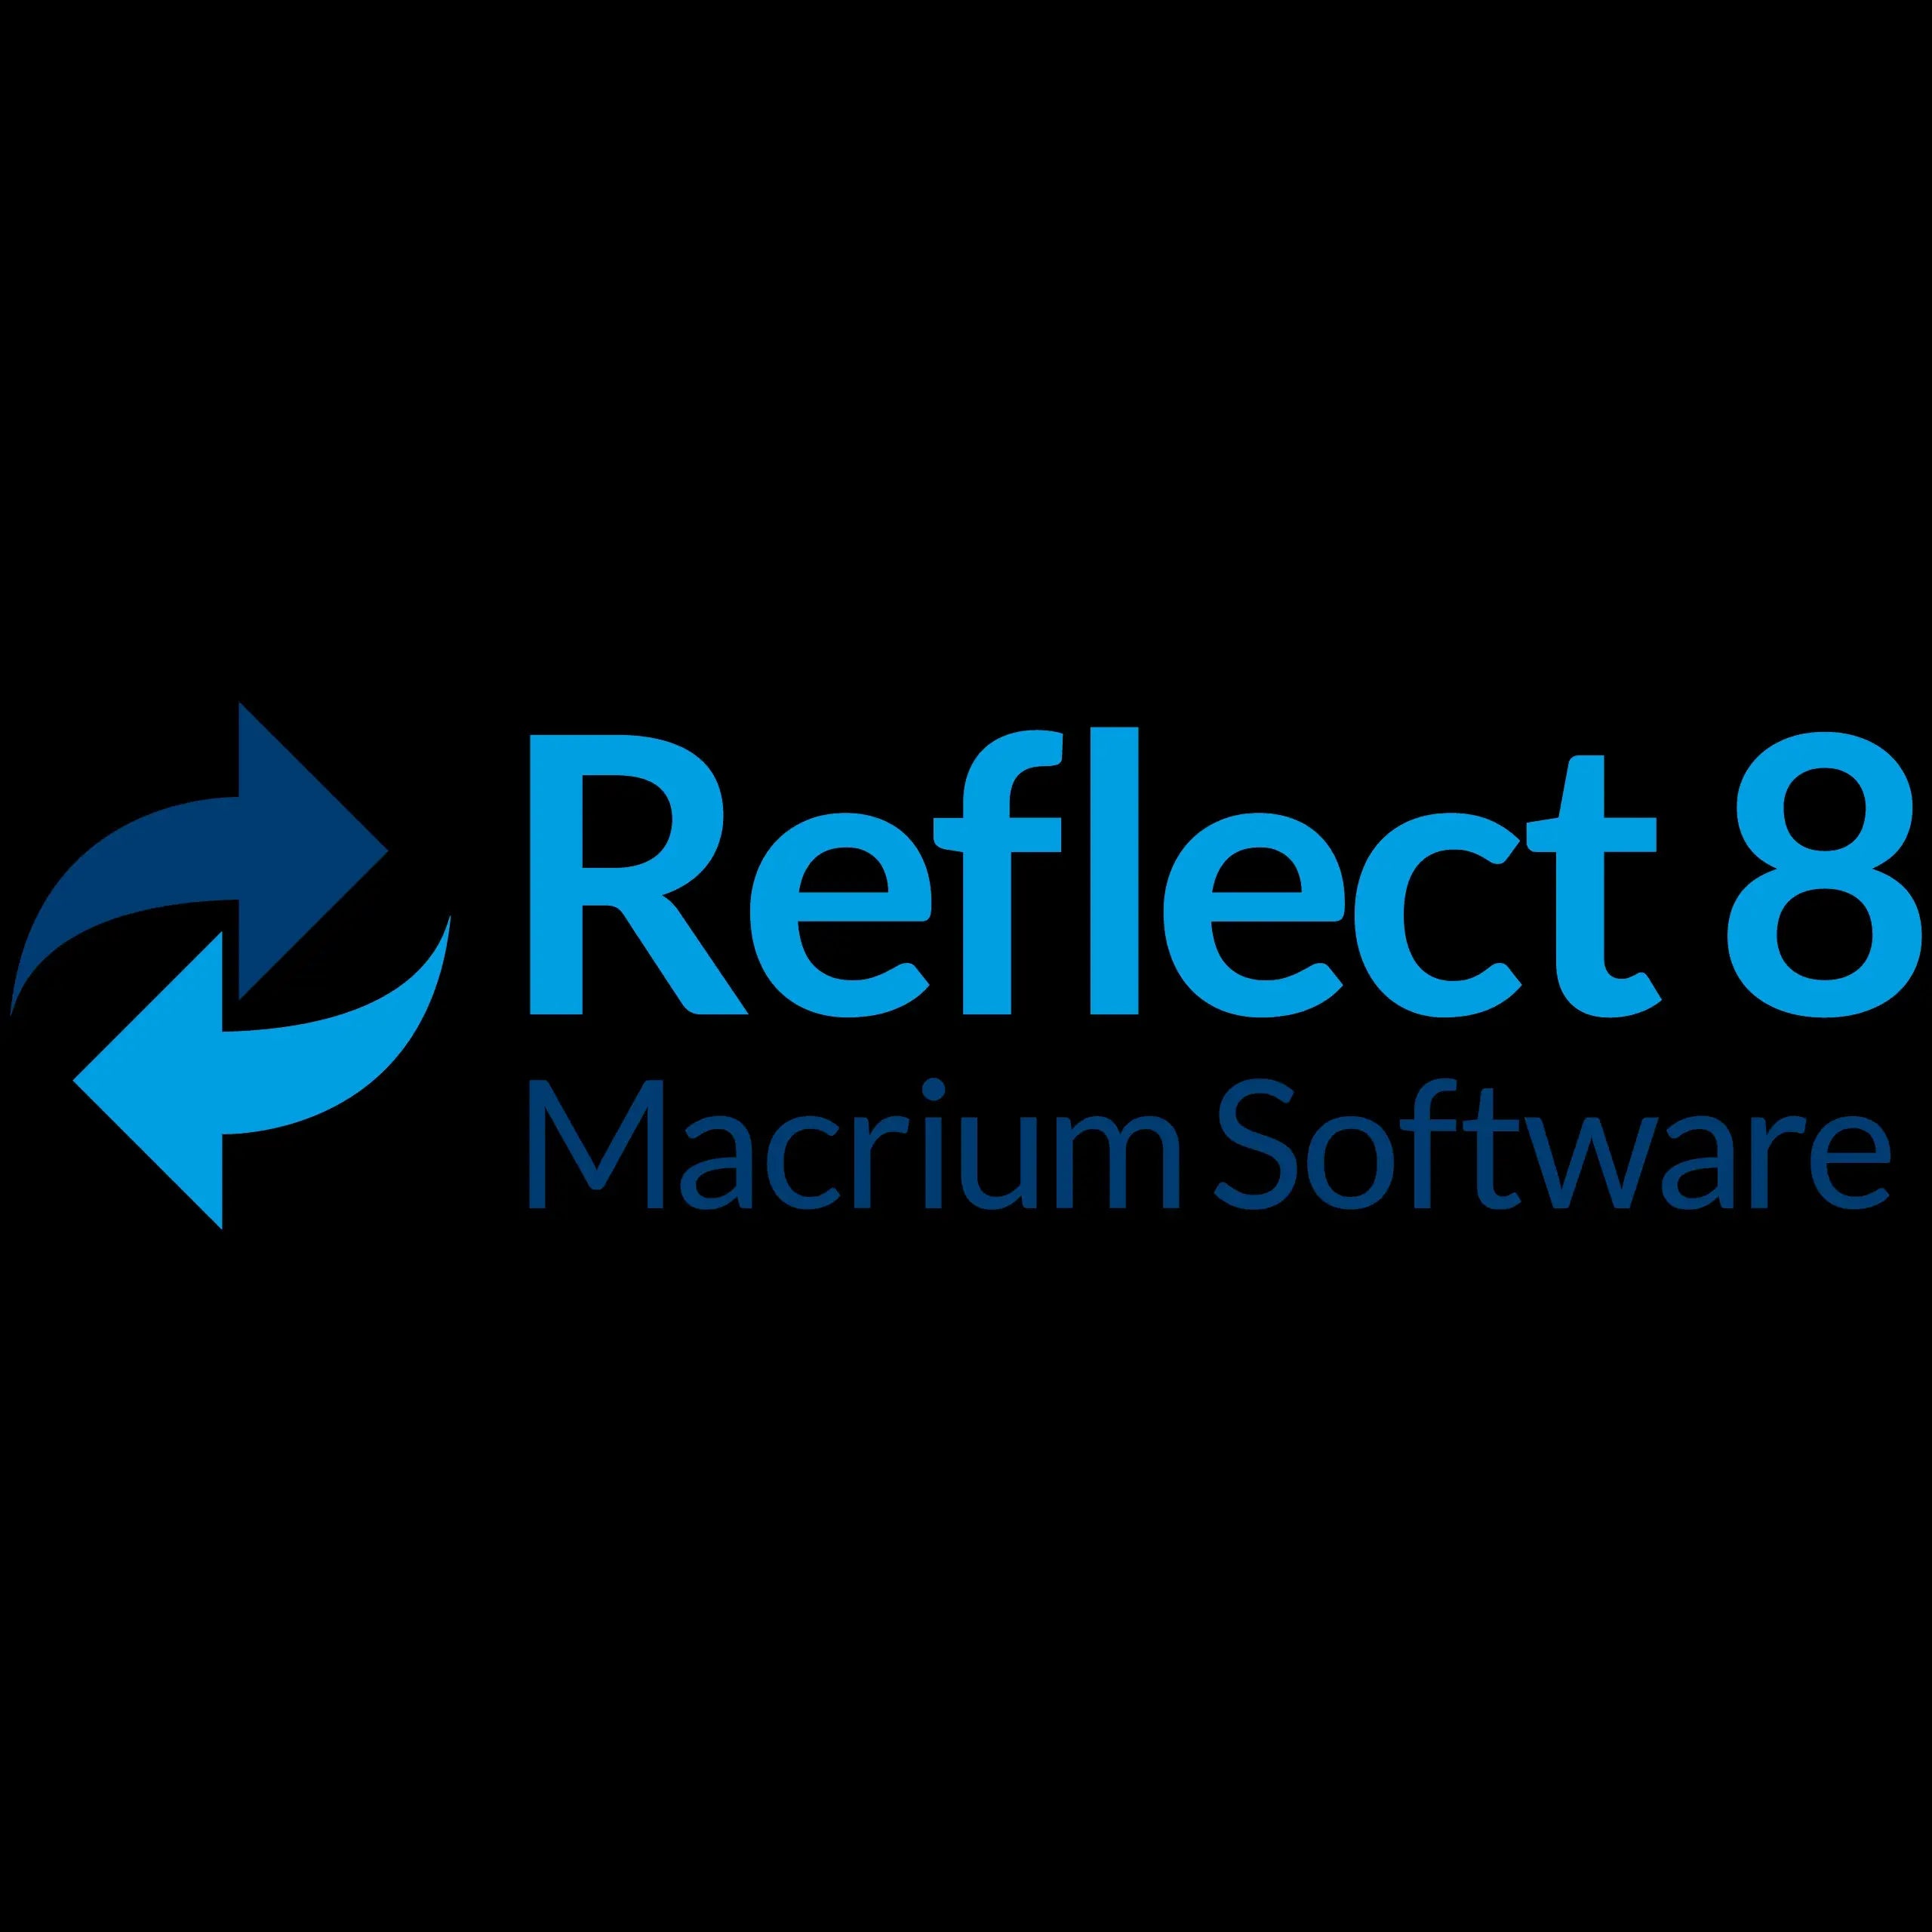 Macrium Reflect 8 Home Edition